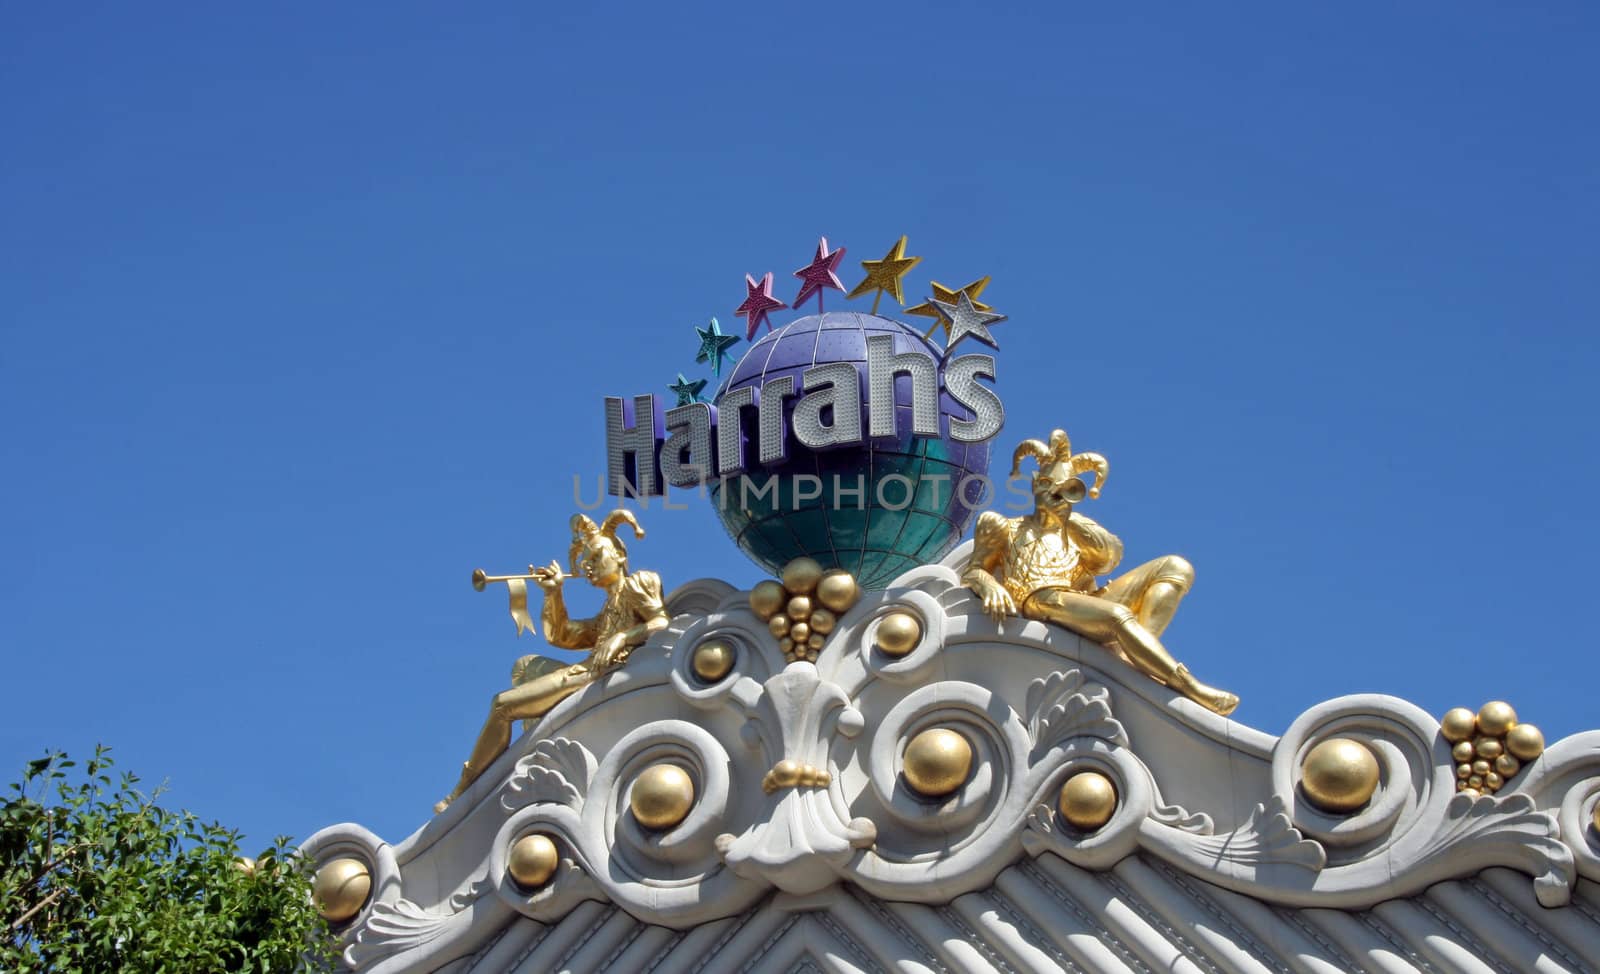 An exterior shot of Harrahs hotel and casino in Las Vegas